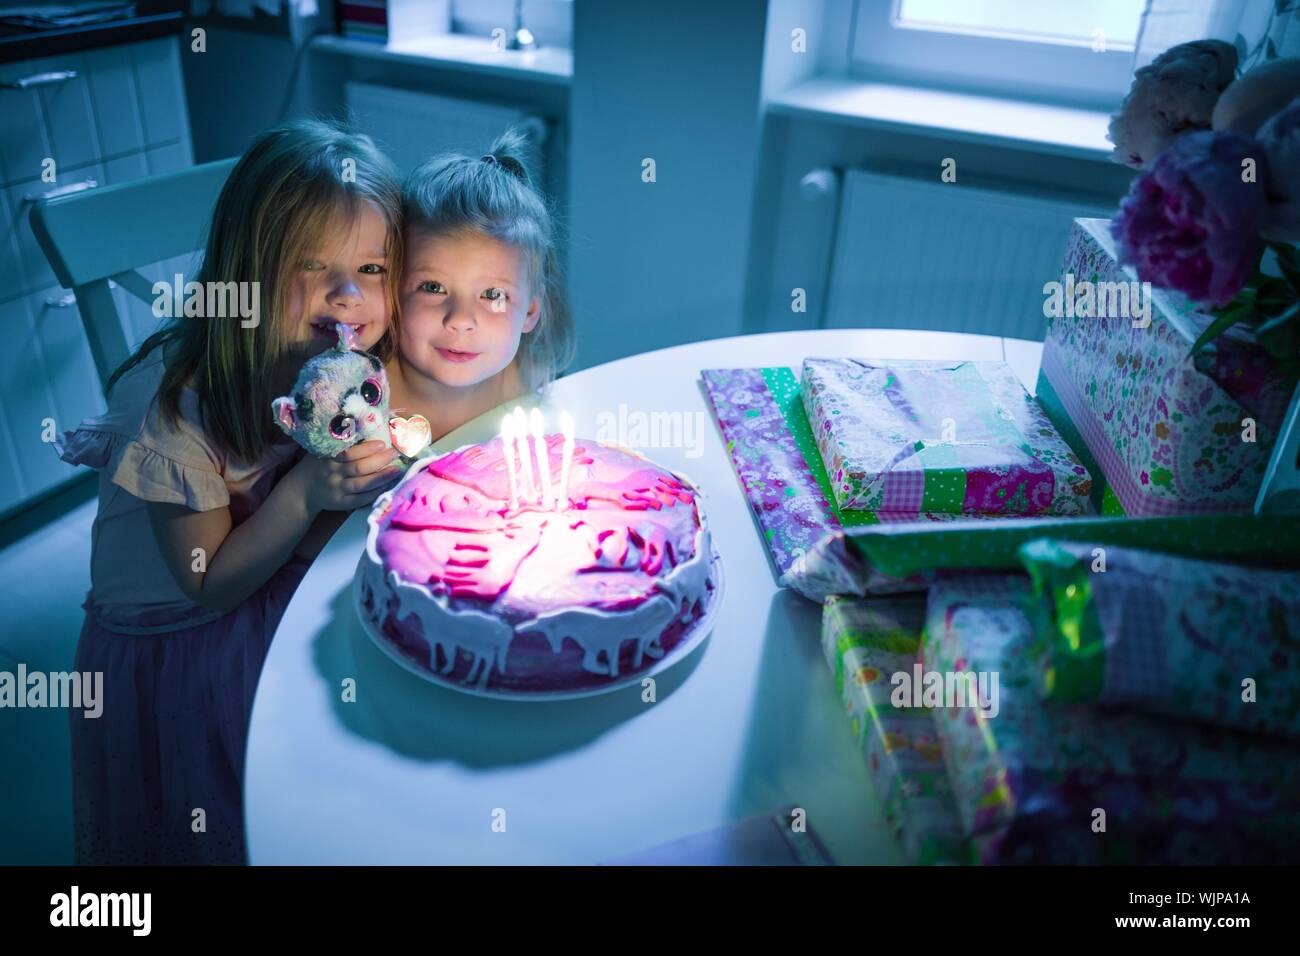 Two Girls With Birthday Cake Stock Photo - Alamy